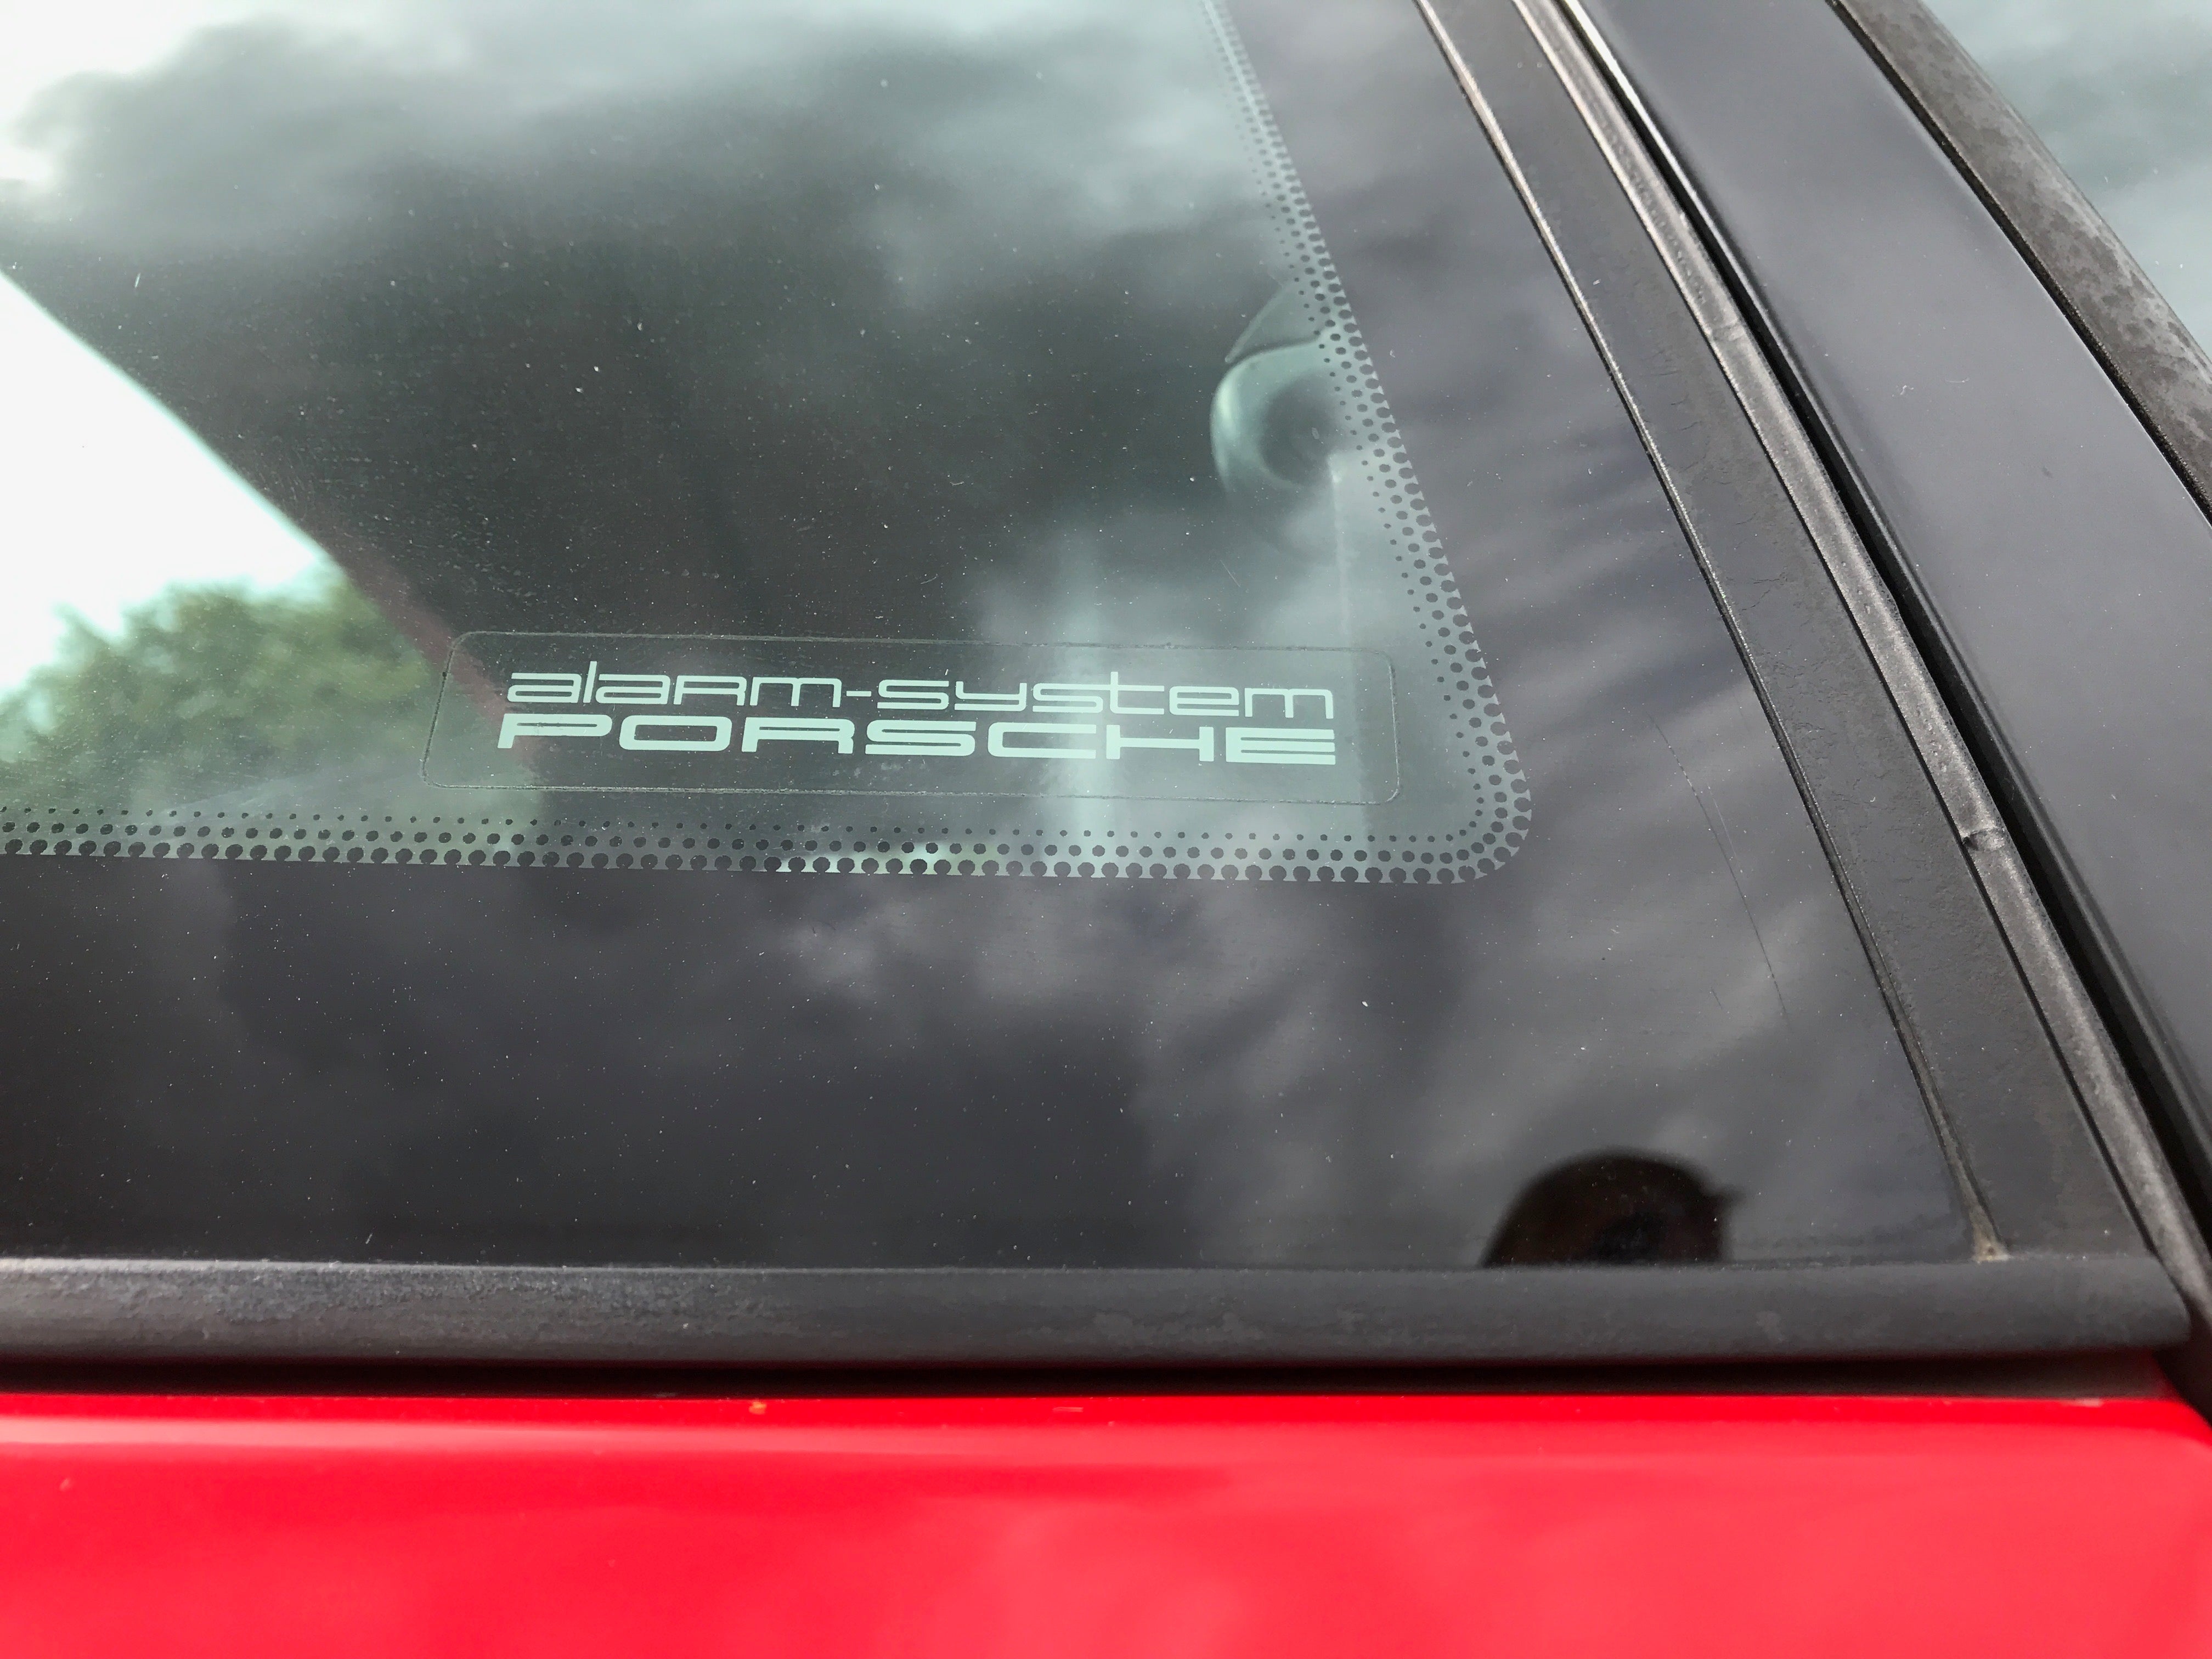 Official Porsche 2x 'Porsche Alarm System' Window Stickers for Porsche 928 Models